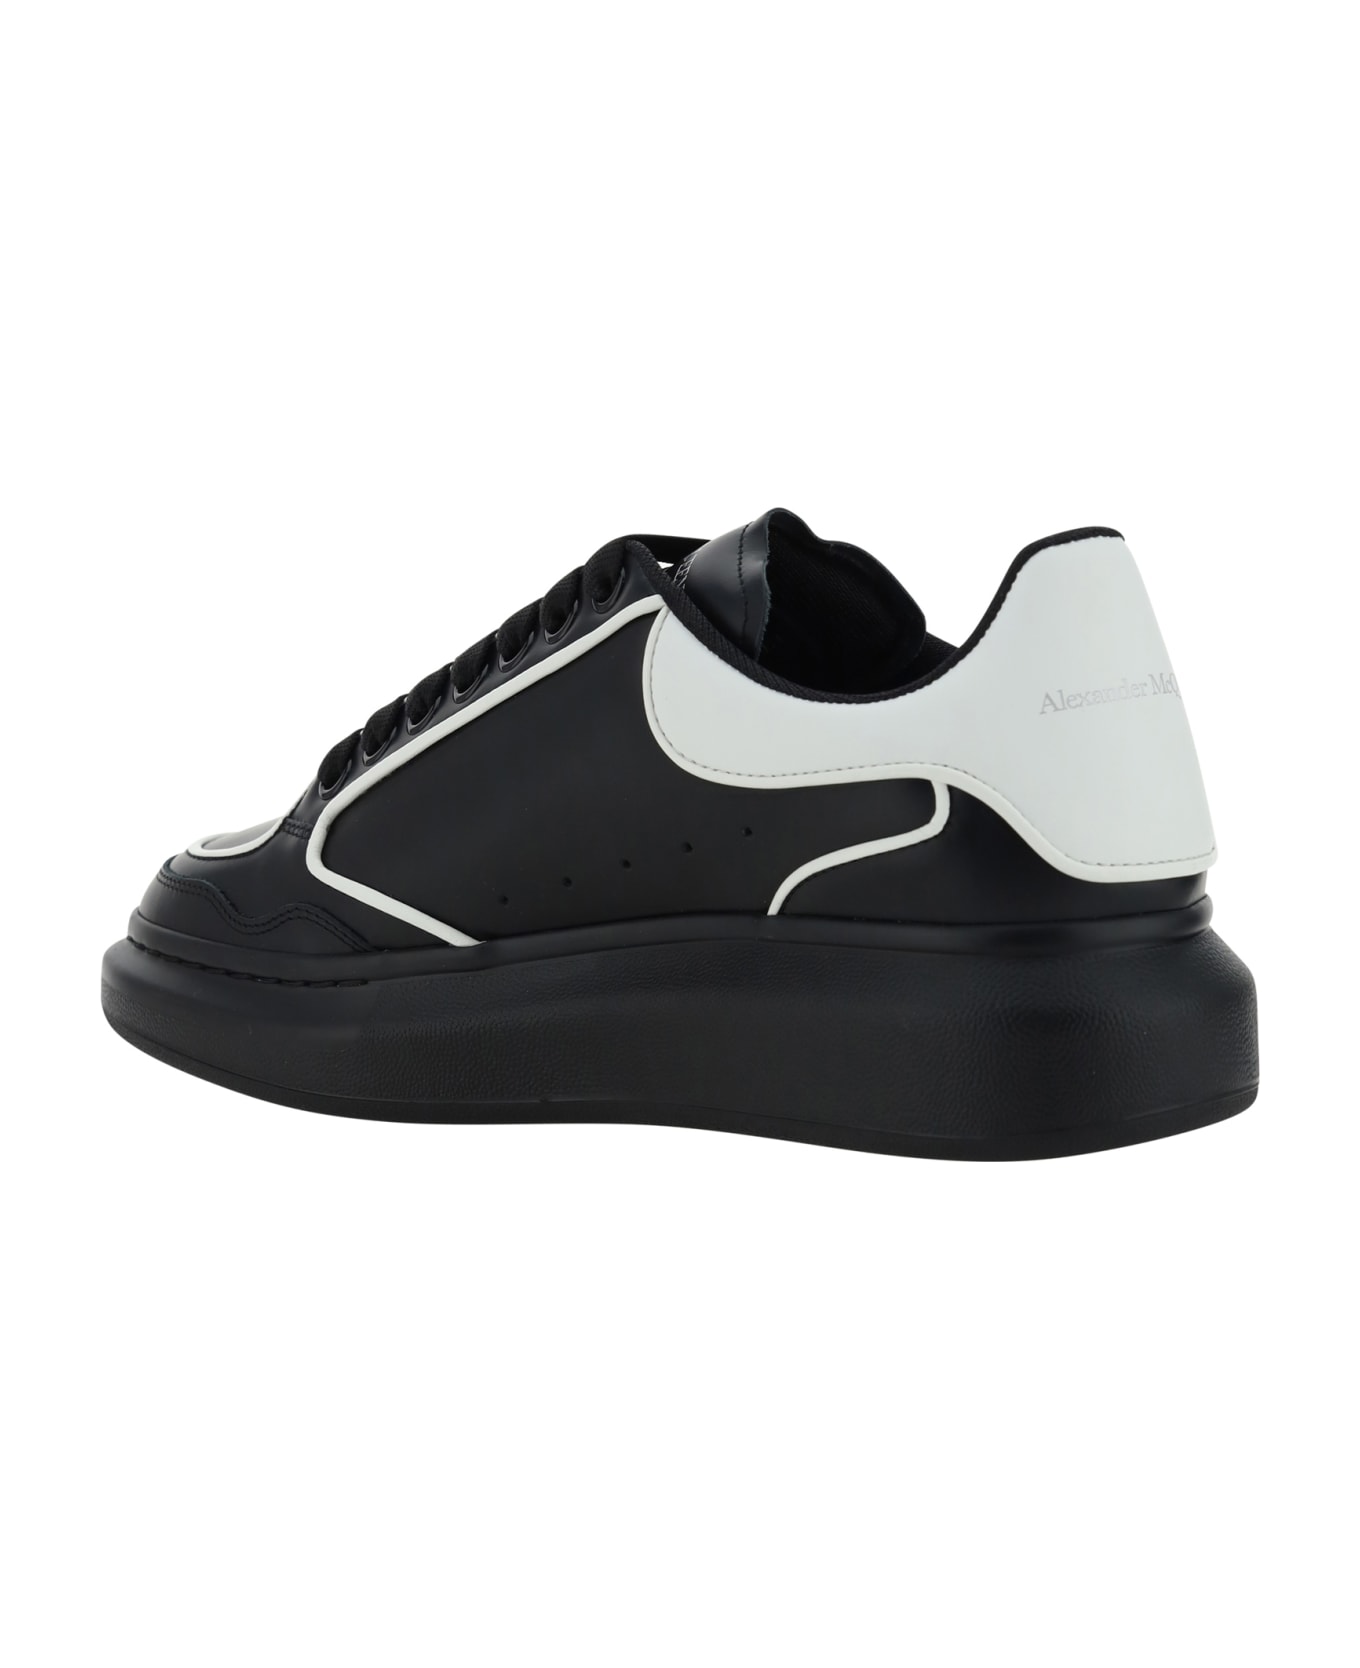 Alexander McQueen Sneakers - Black/white/white